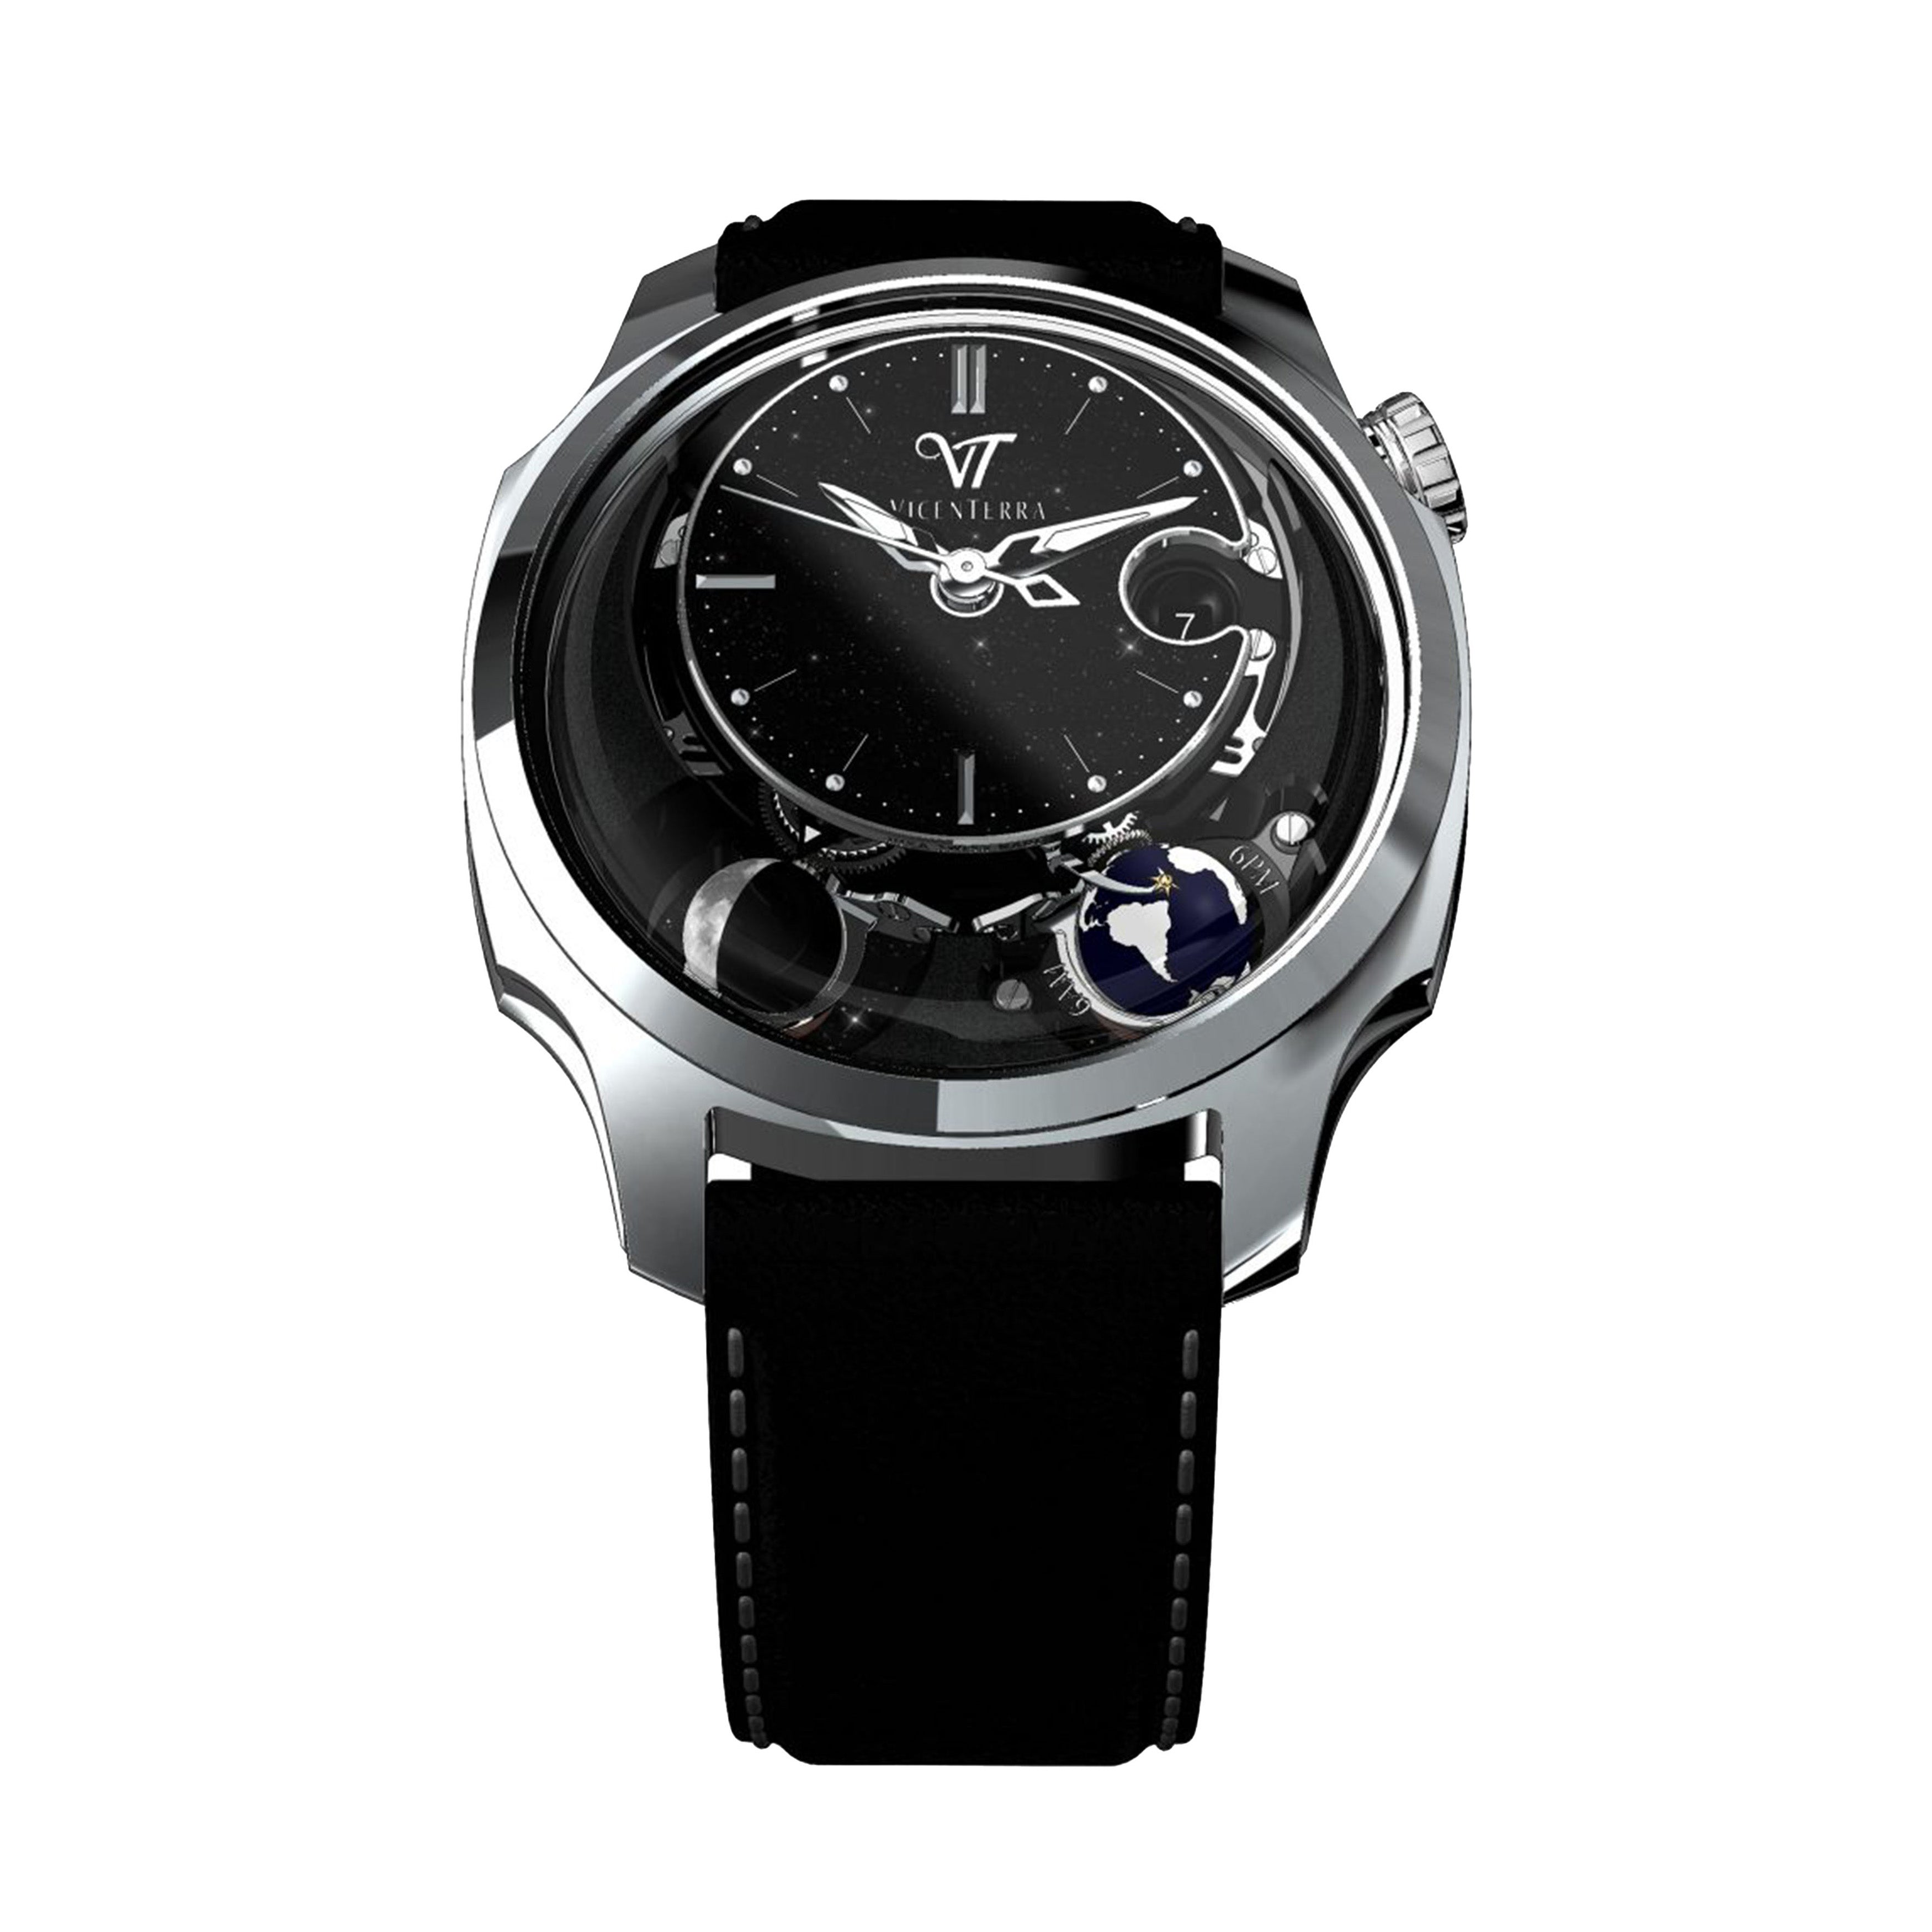 Vicenterra Astroluna T3 Black Cosmos Watch, 41.5mm Black Aventurine Dial, VT.354.01.23